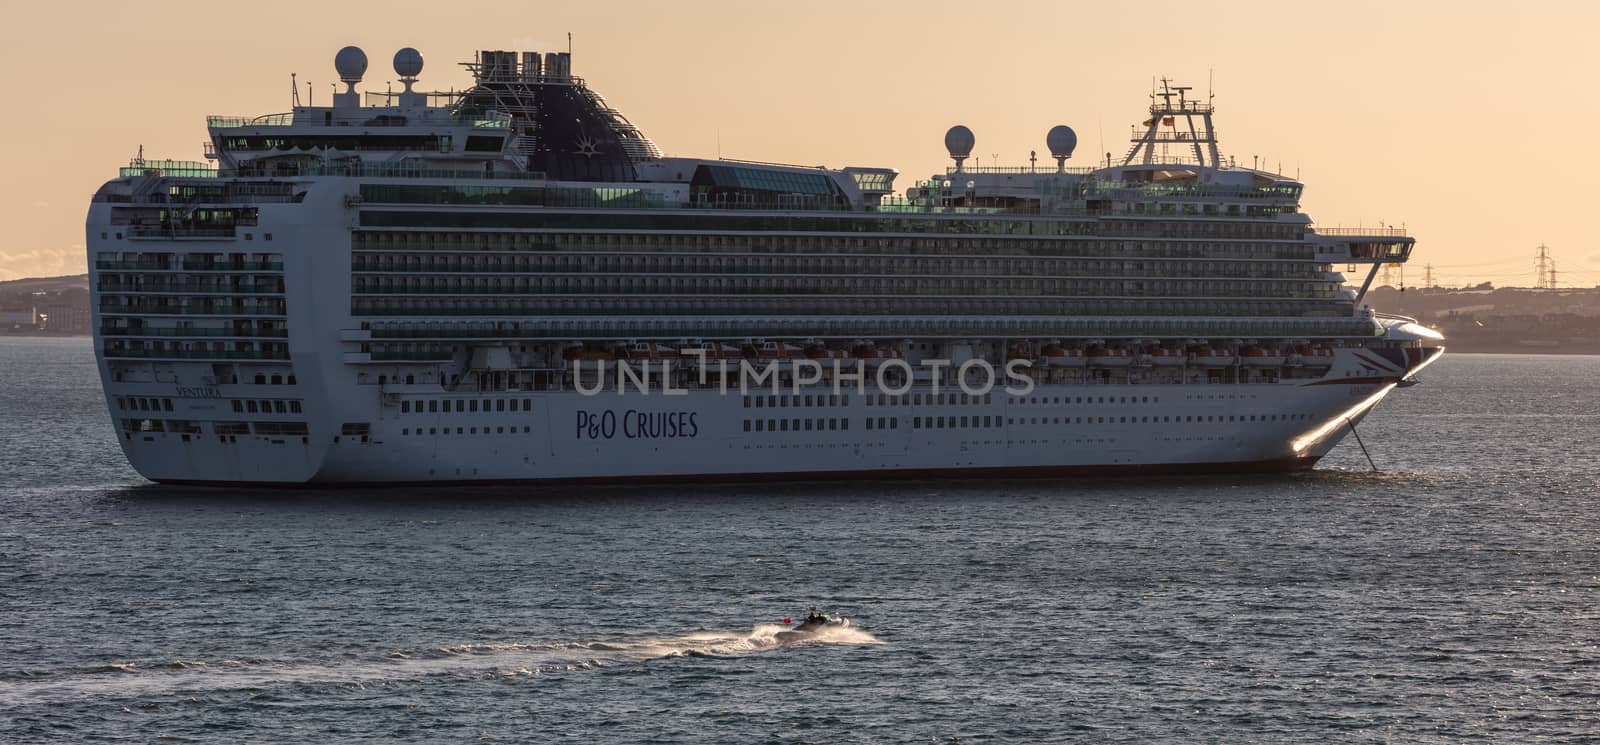 Weymouth Bay, United Kingdom - July 10, 2020: Beautiful panoramic shot of P&O cruise ship Ventura anchored in Weymouth Bay at sunset